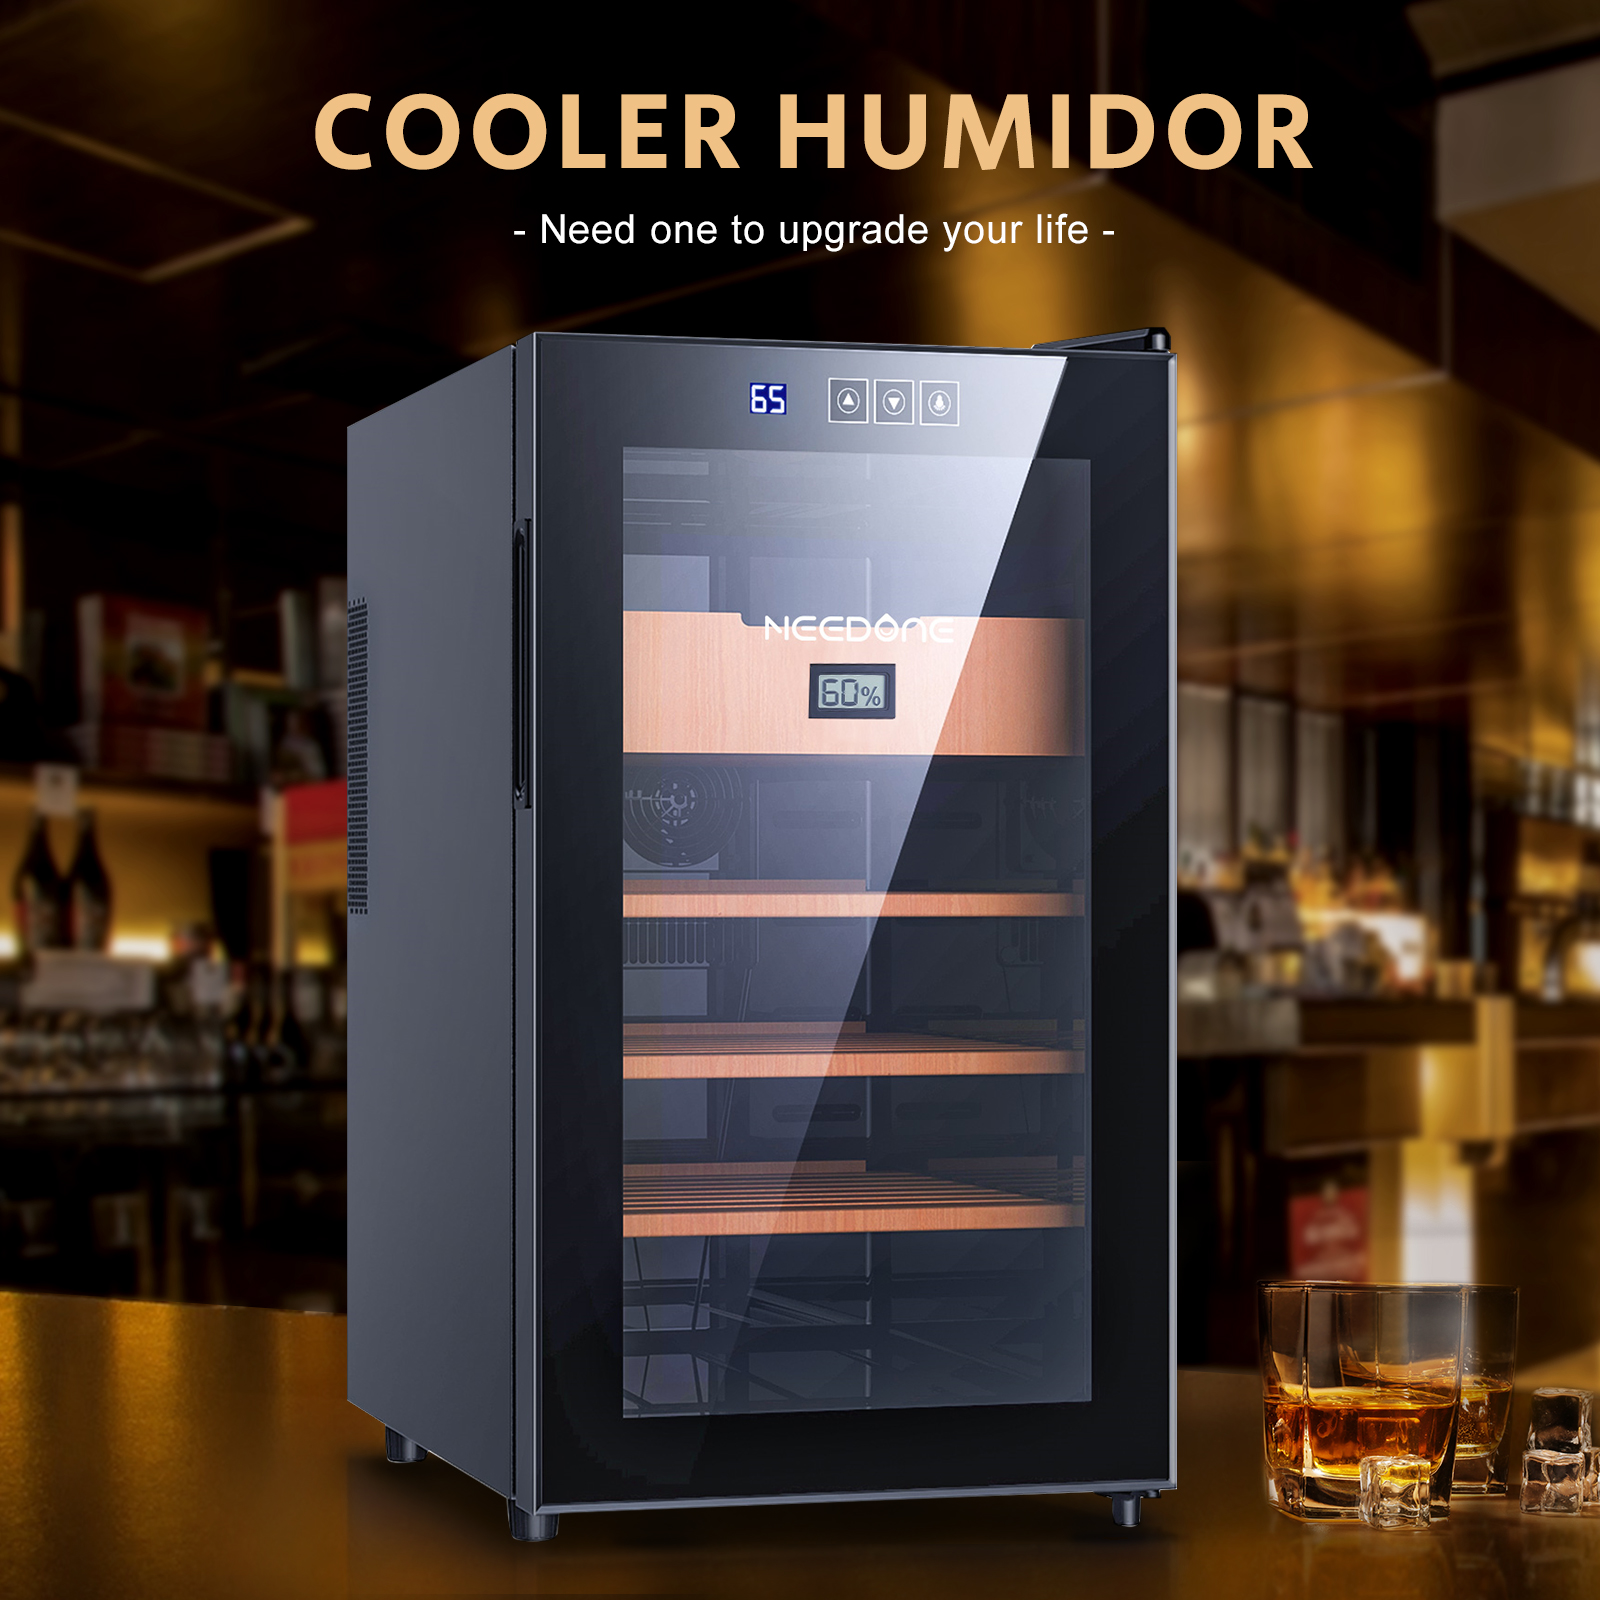 NEEDONE-48L-Cooler-Humidor-Electronic-Cooler-Humidor-with-Heating-300-Capacity-with-Spanish-Cedar-Wo-1939254-1